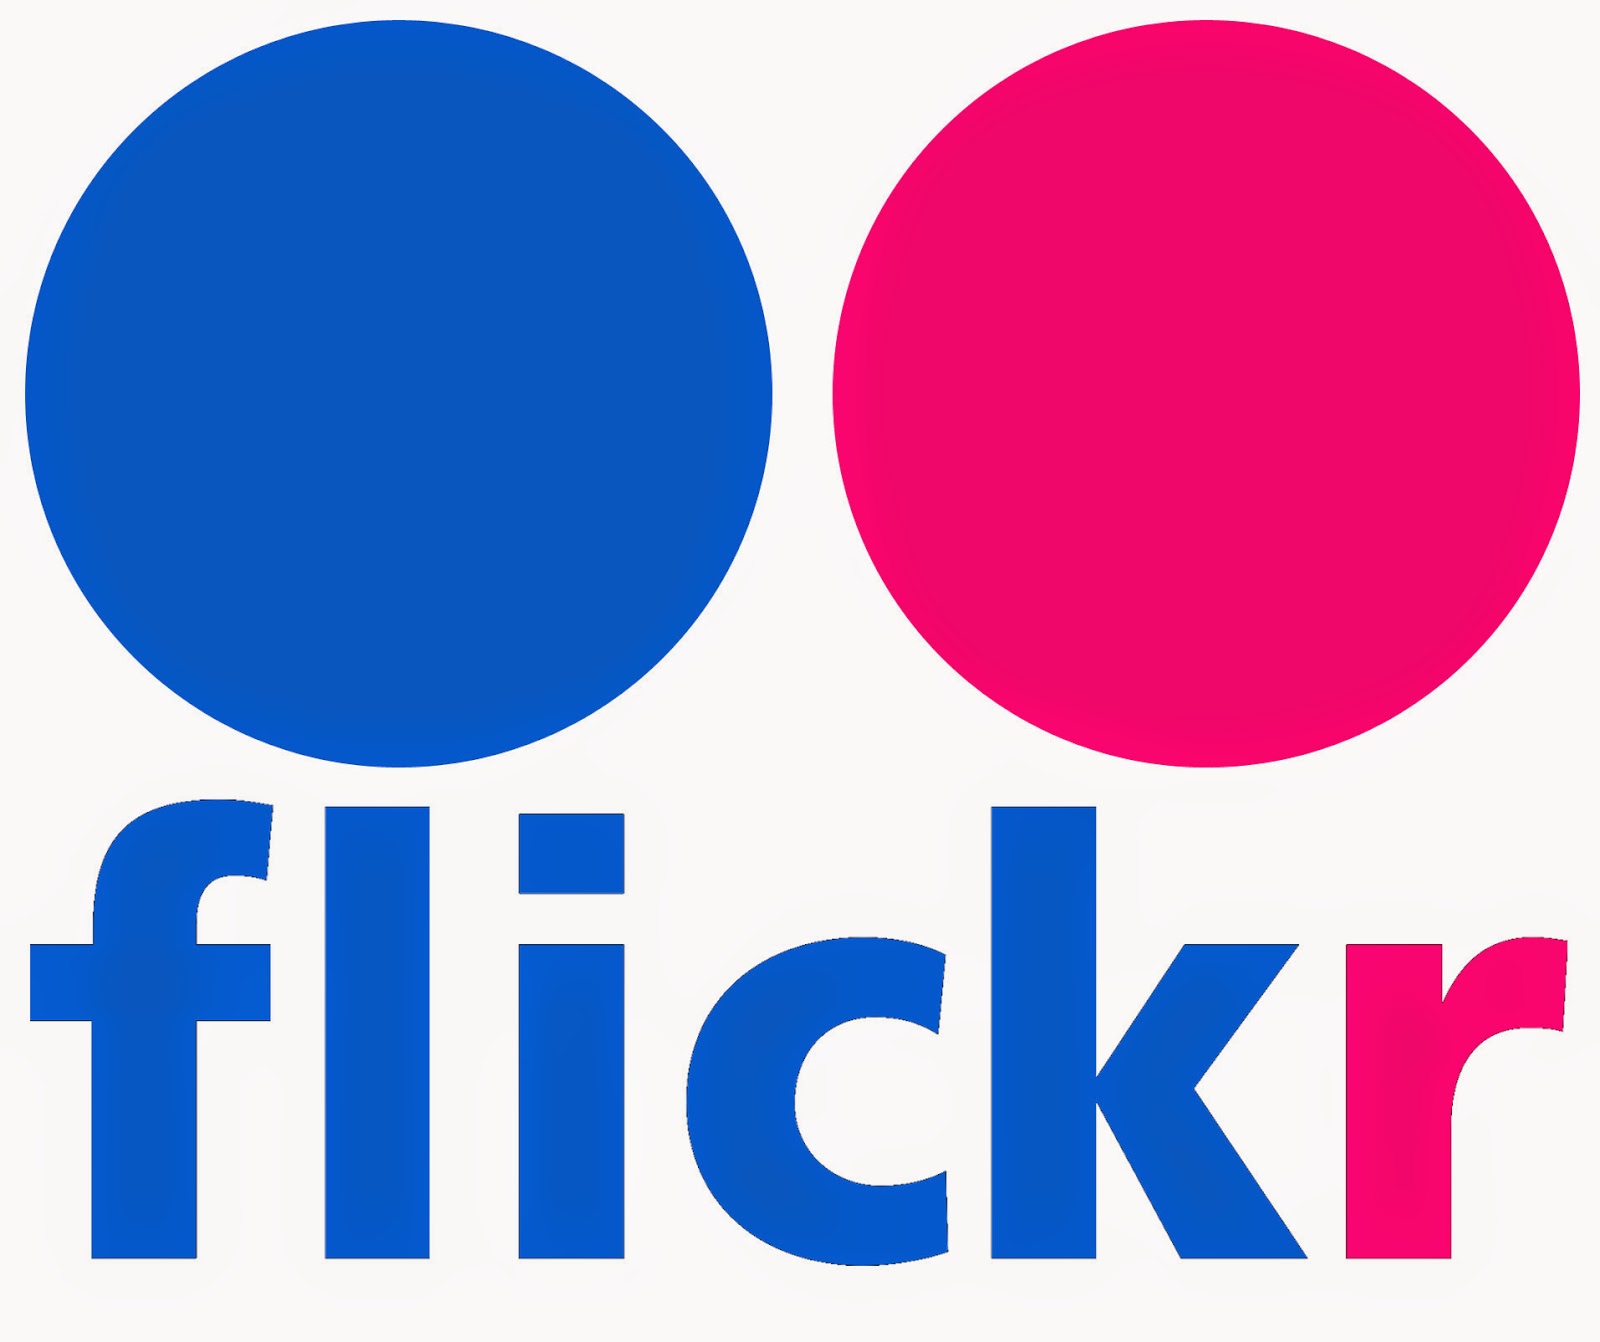 Inilah Alasannya mengapa Yahoo bersikeras ingin membeli Flicker.com untuk Flickr.com